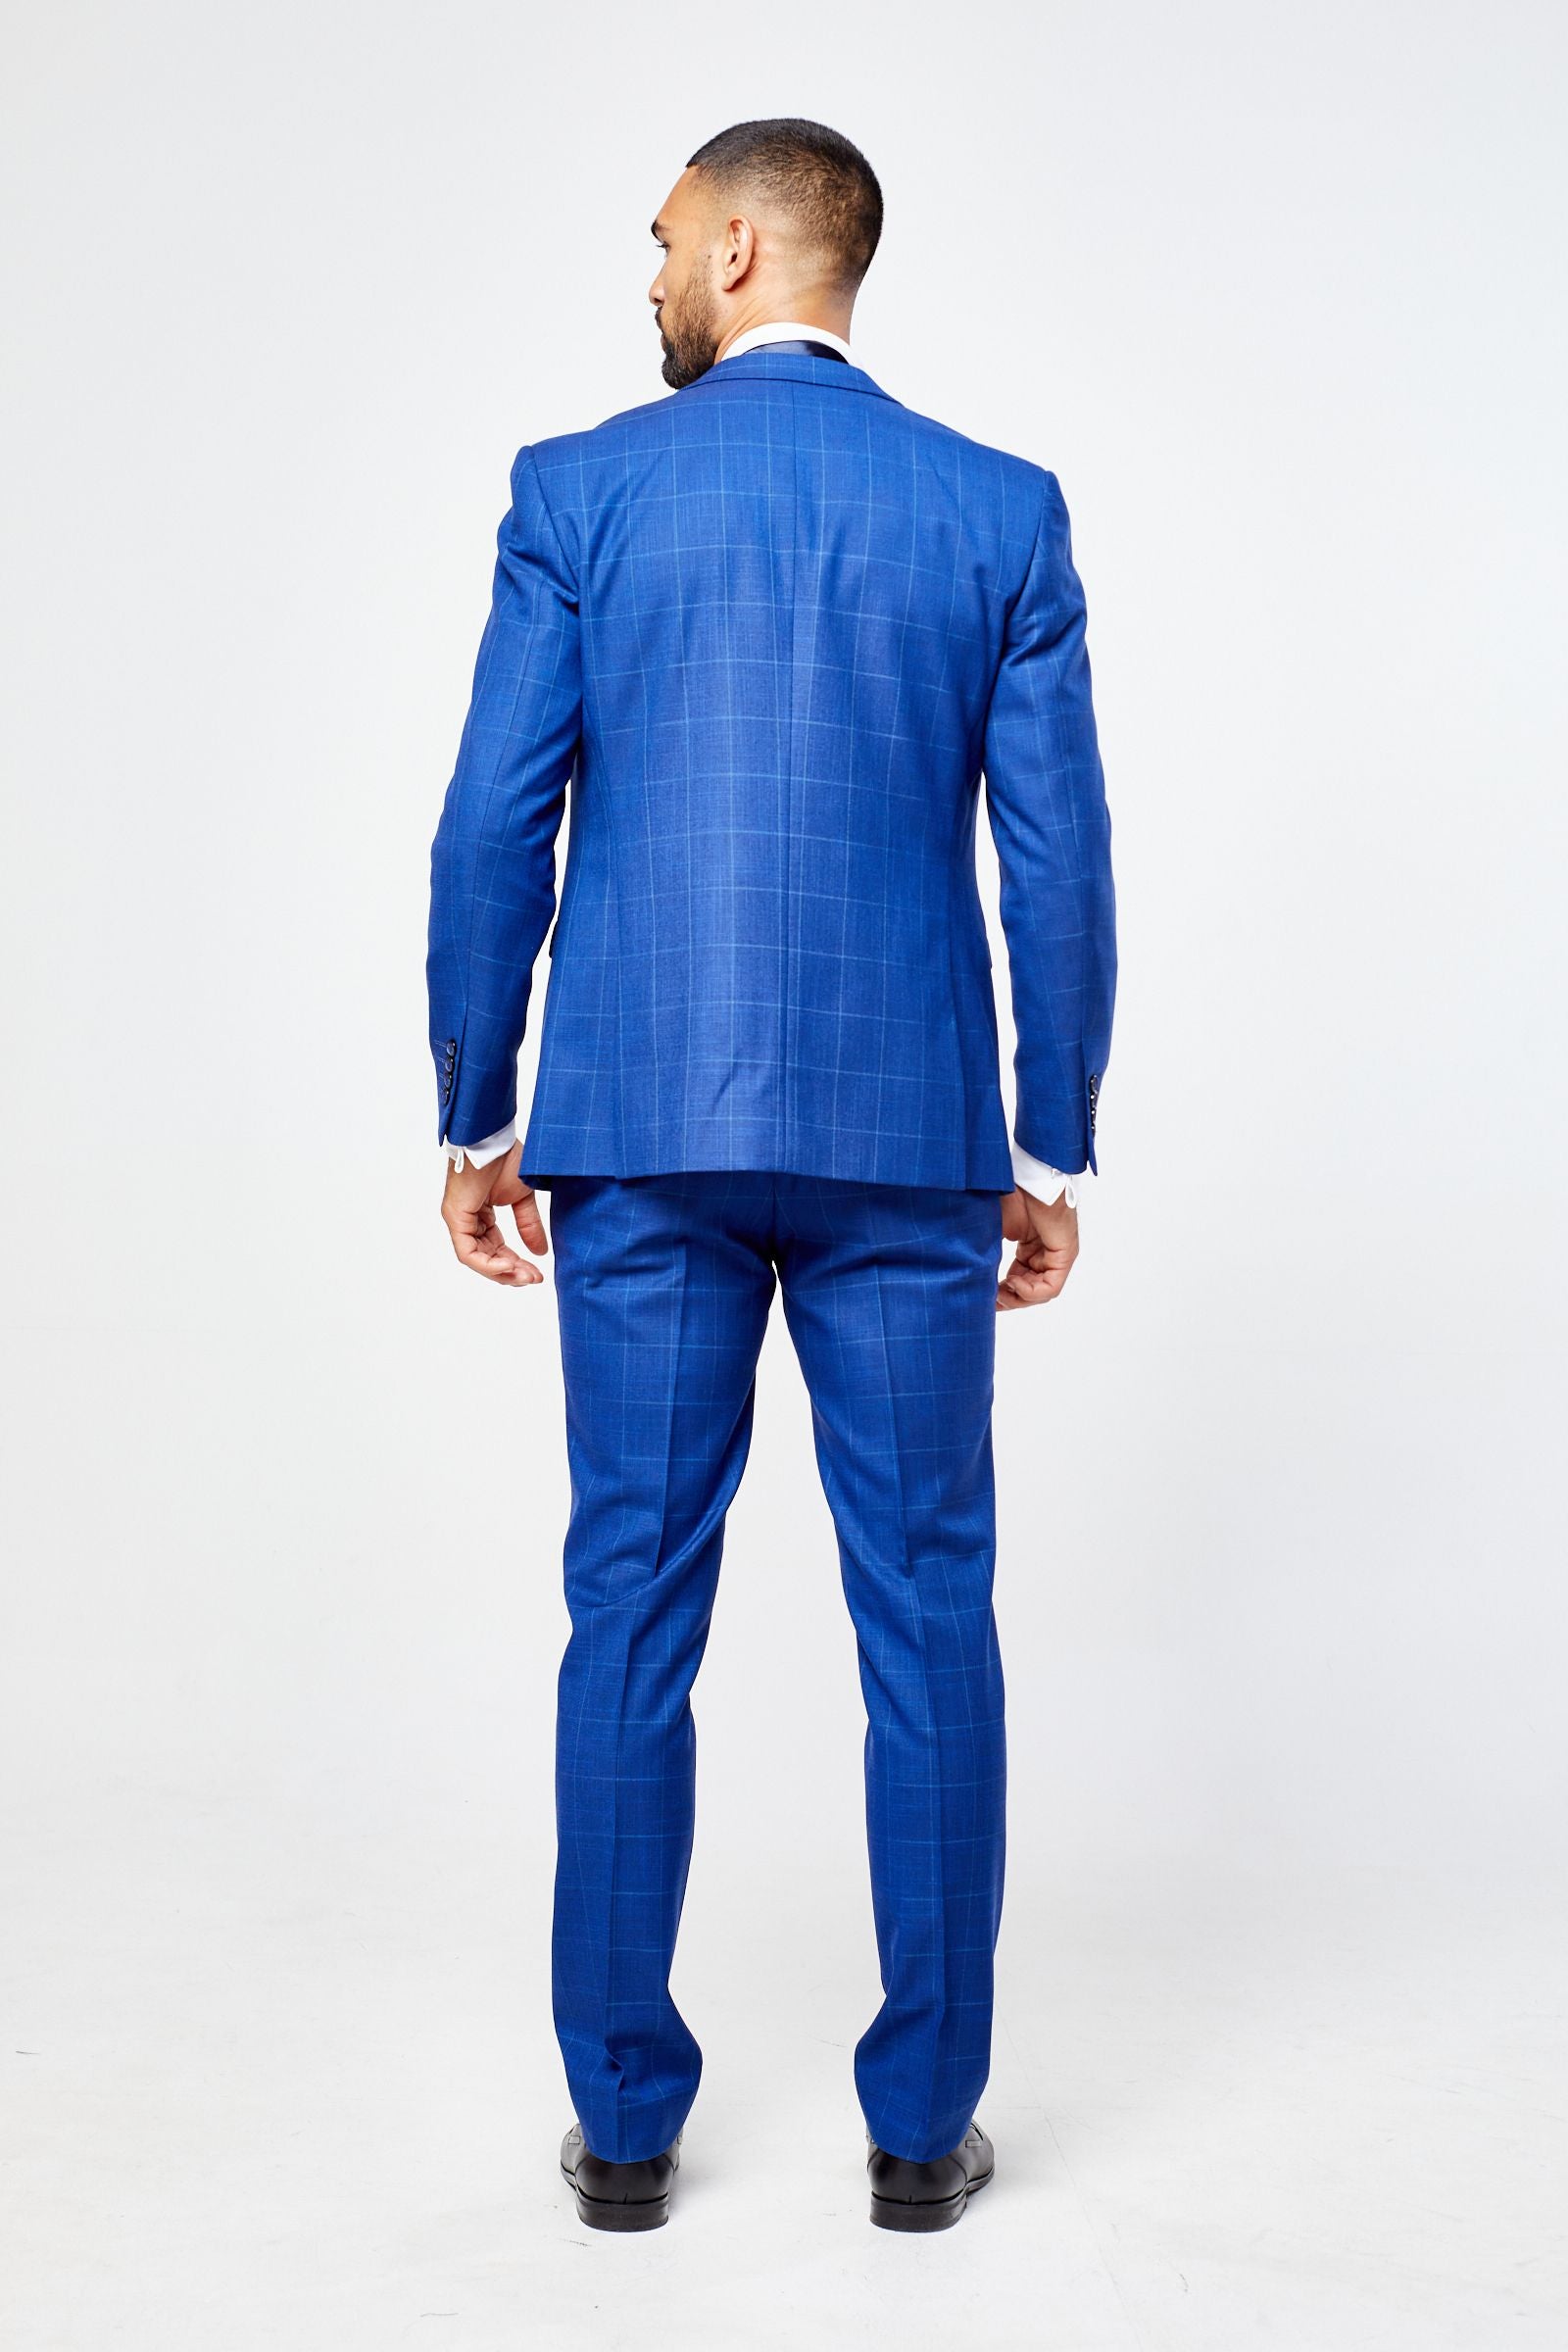 Rover Blue Men's Three Piece Suit